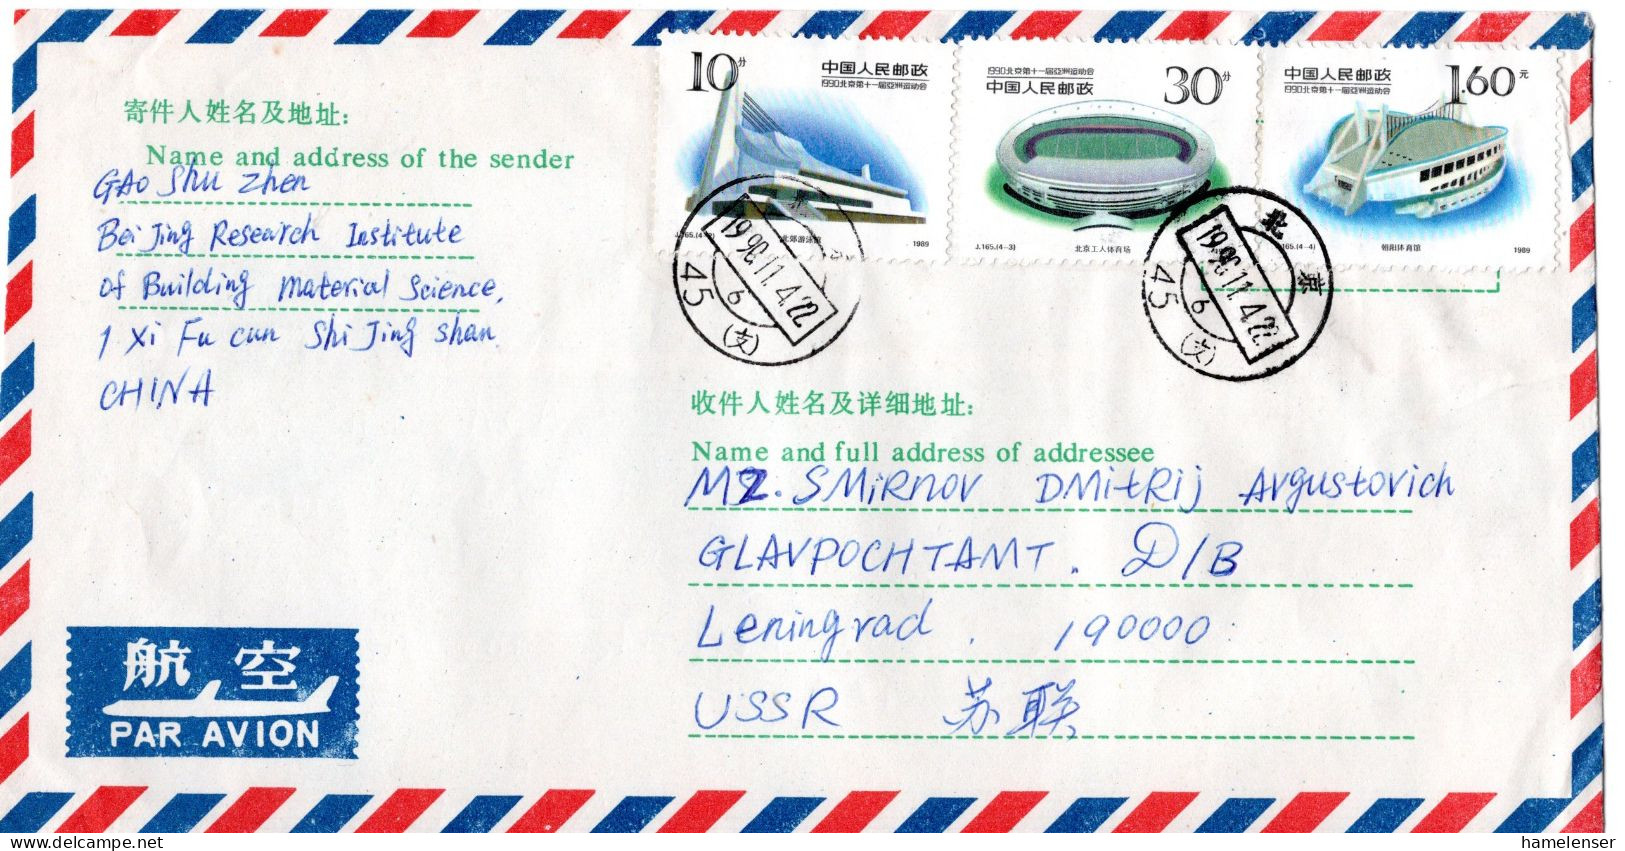 L78820 - VR China - 1991 - ¥1.60 Asienspiele MiF A LpBf BEIJING -> LENINGRAD (UdSSR) - Covers & Documents